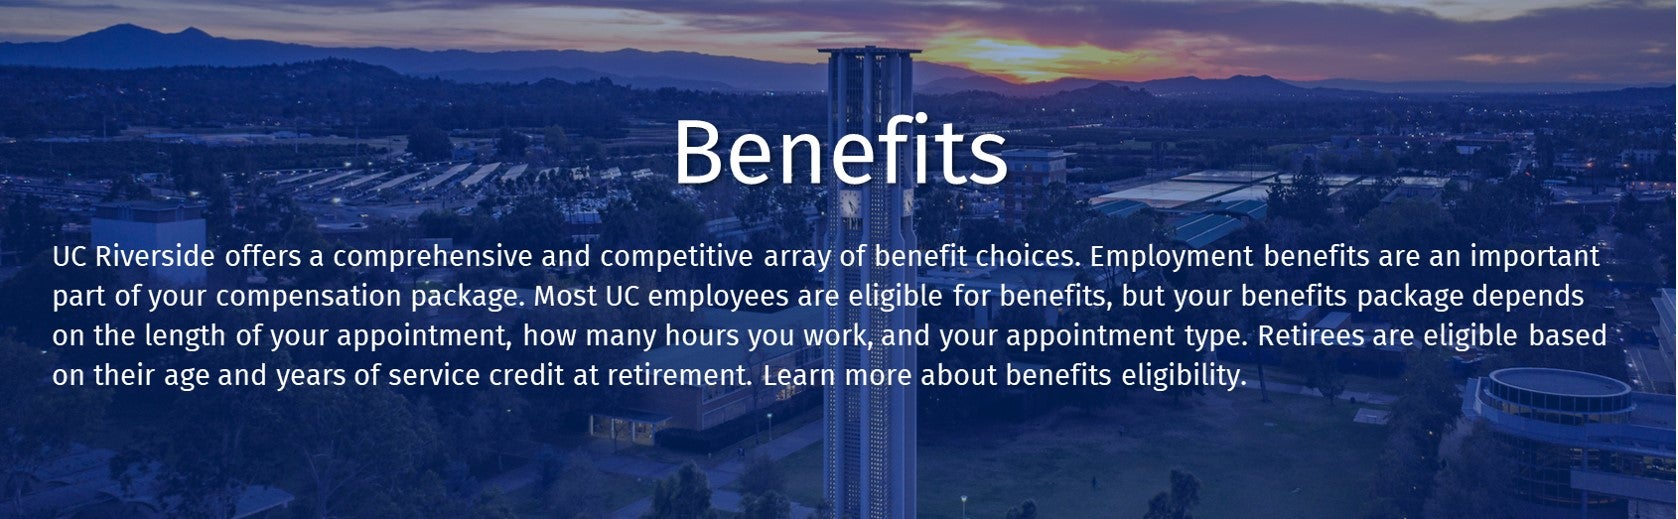 HR Benefits banner image